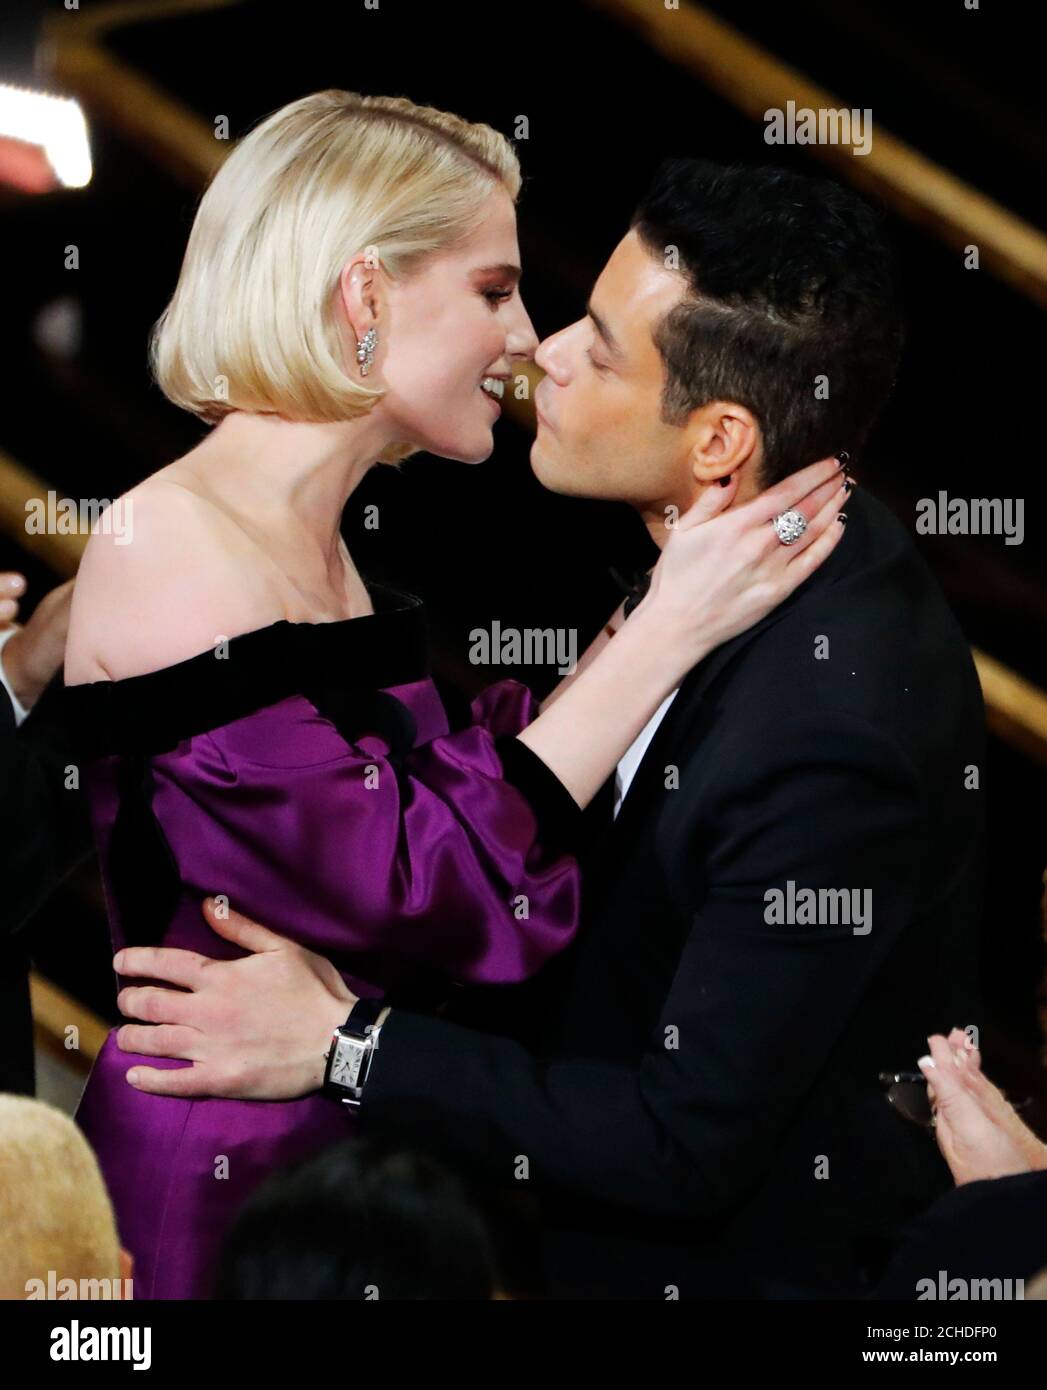 91st Academy Awards - Oscars Show - Hollywood, Los Angeles, California,  U.S., February 24, 2019. Rami Malek kisses Lucy Boynton as he accepts the  Best Actor award for his role in "Bohemian